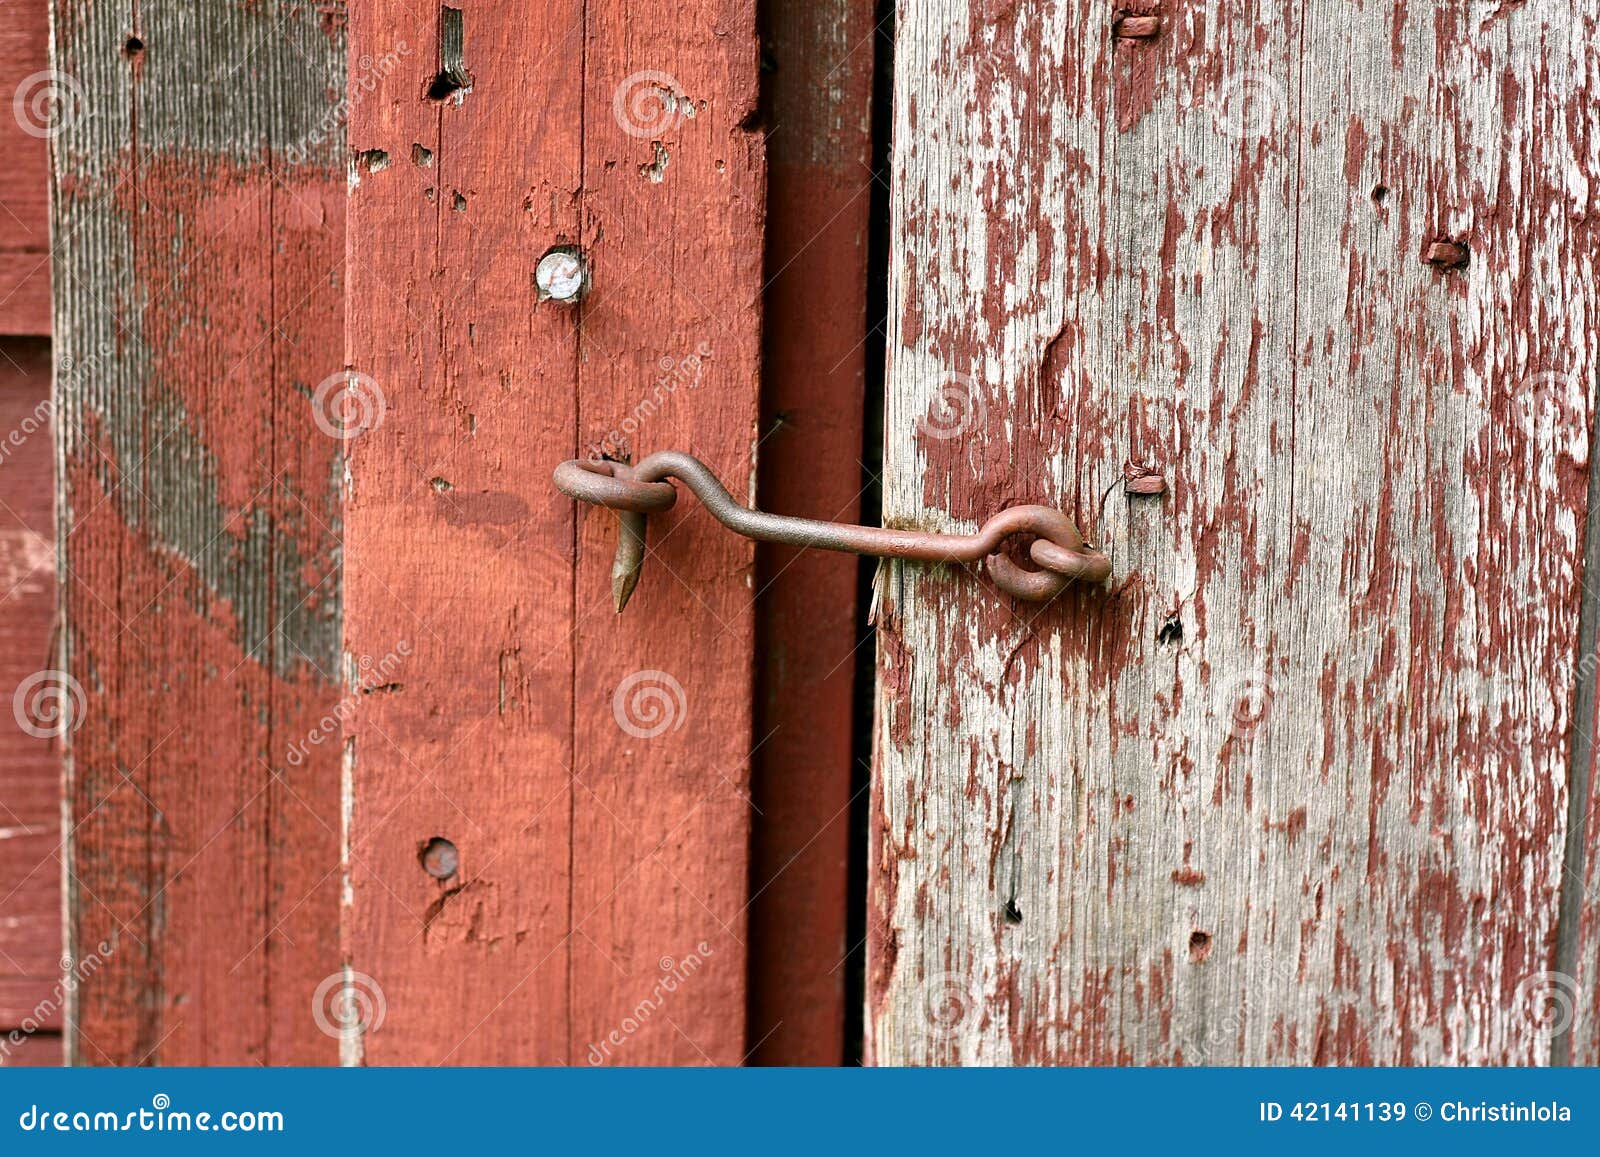  Iron Hook And Eye Lock On Old Barn Door Stock Photo - Image: 42141139